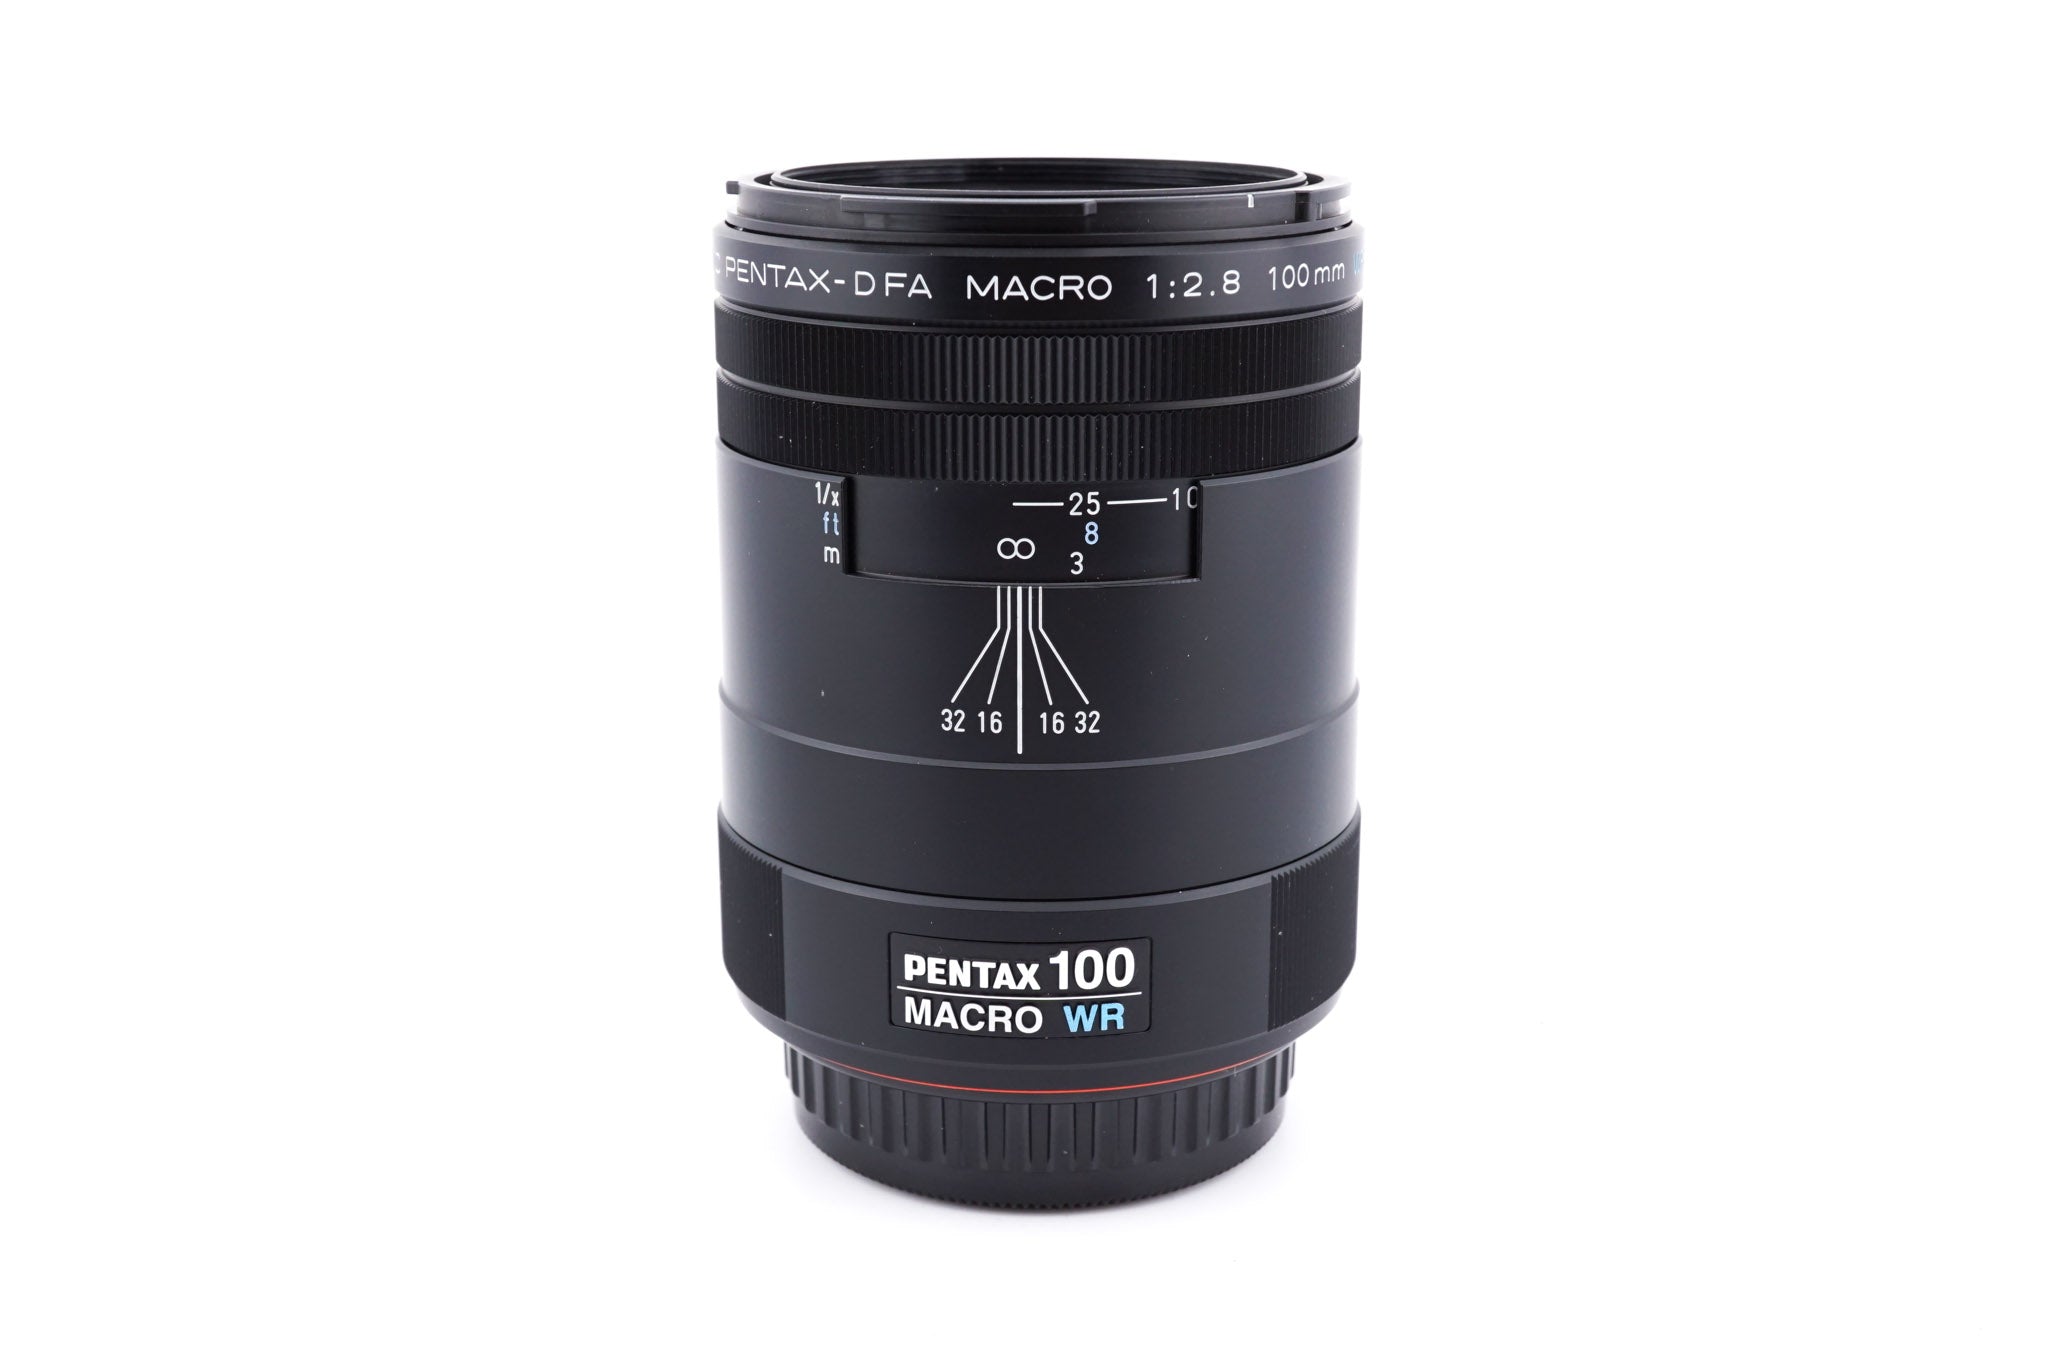 Pentax 100mm f2.8 SMC Pentax-D FA Macro WR - Lens